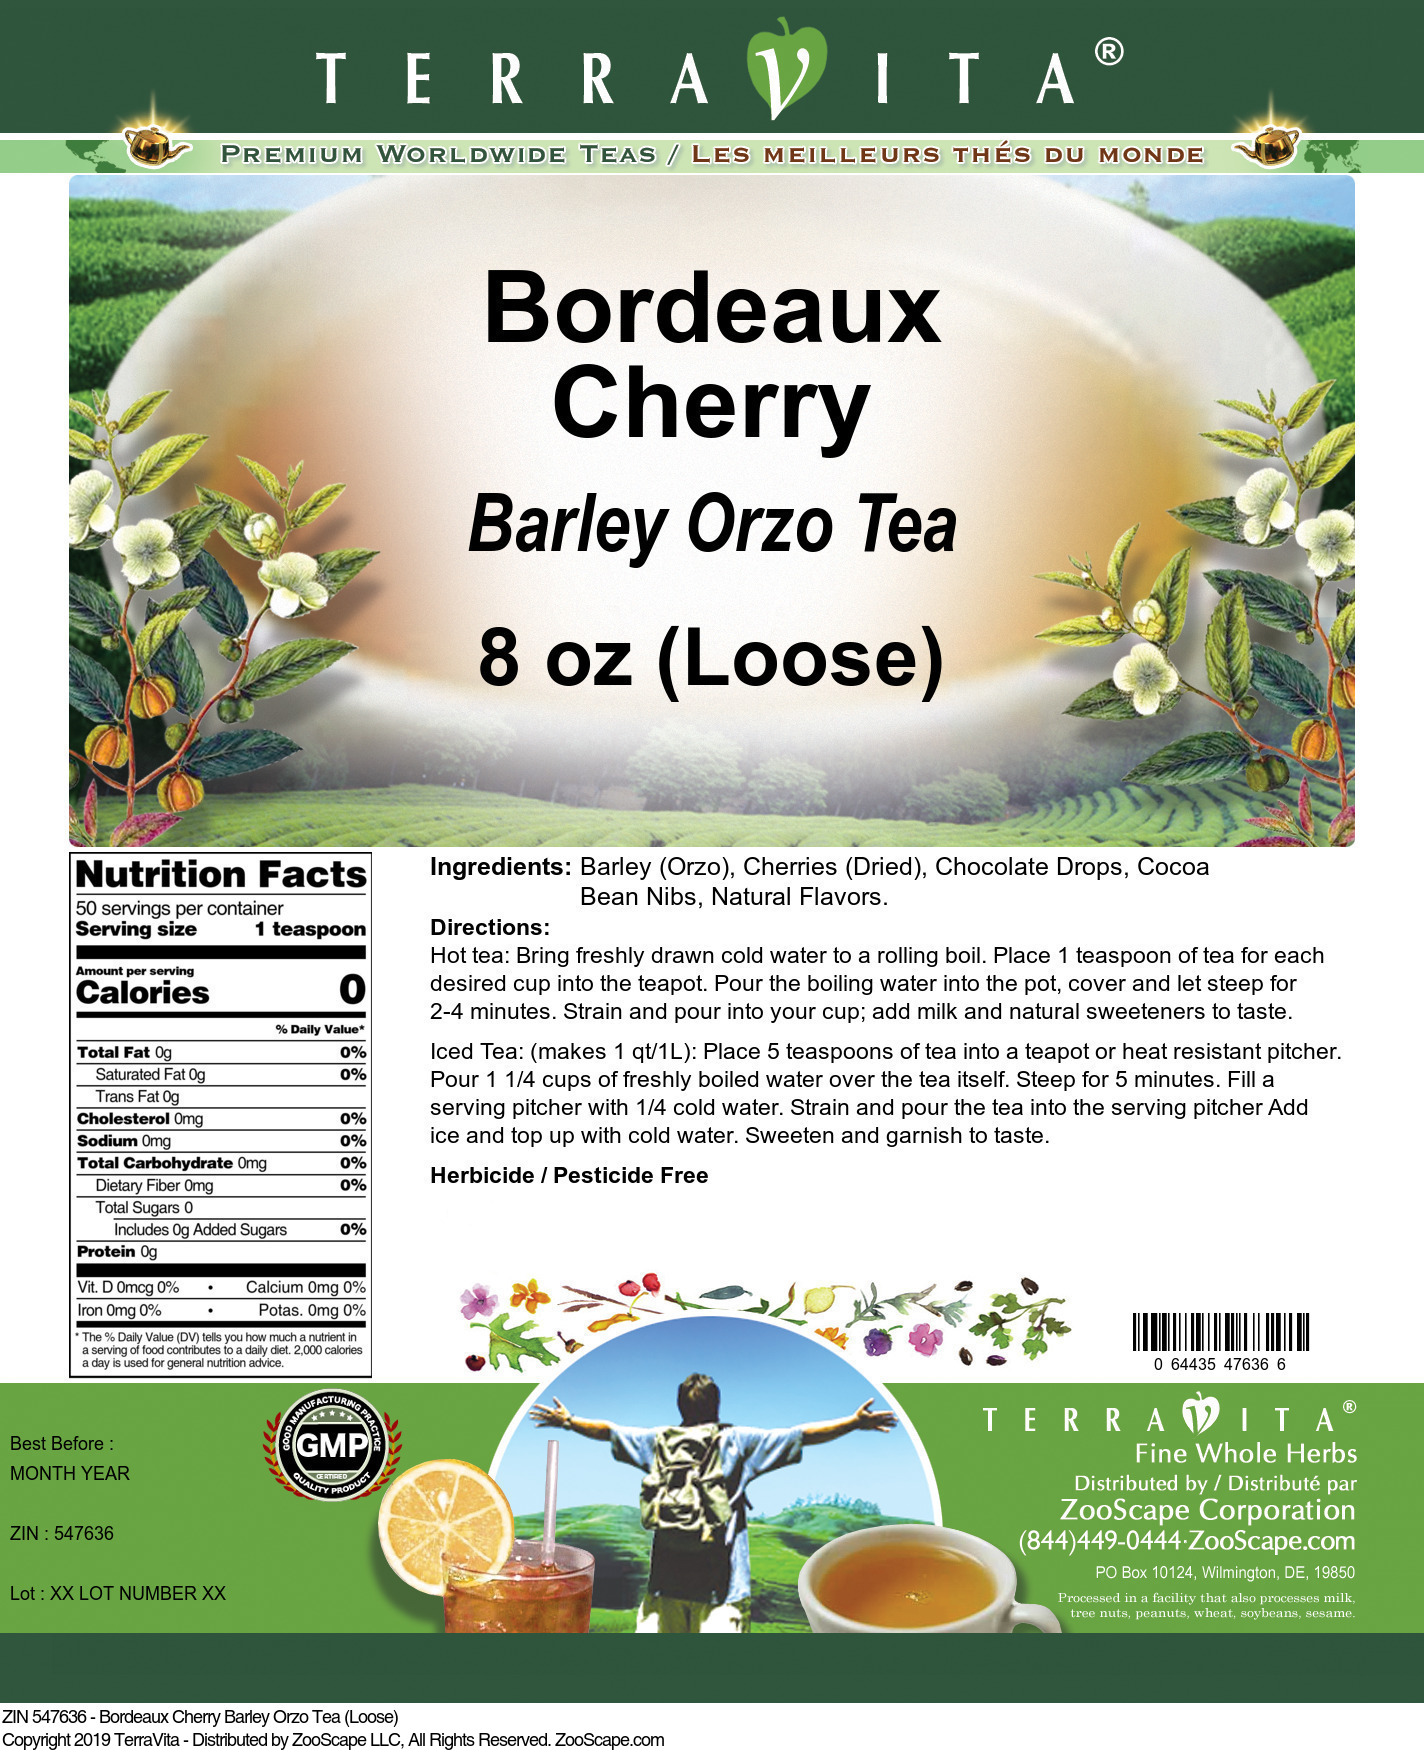 Bordeaux Cherry Barley Orzo Tea (Loose) - Label